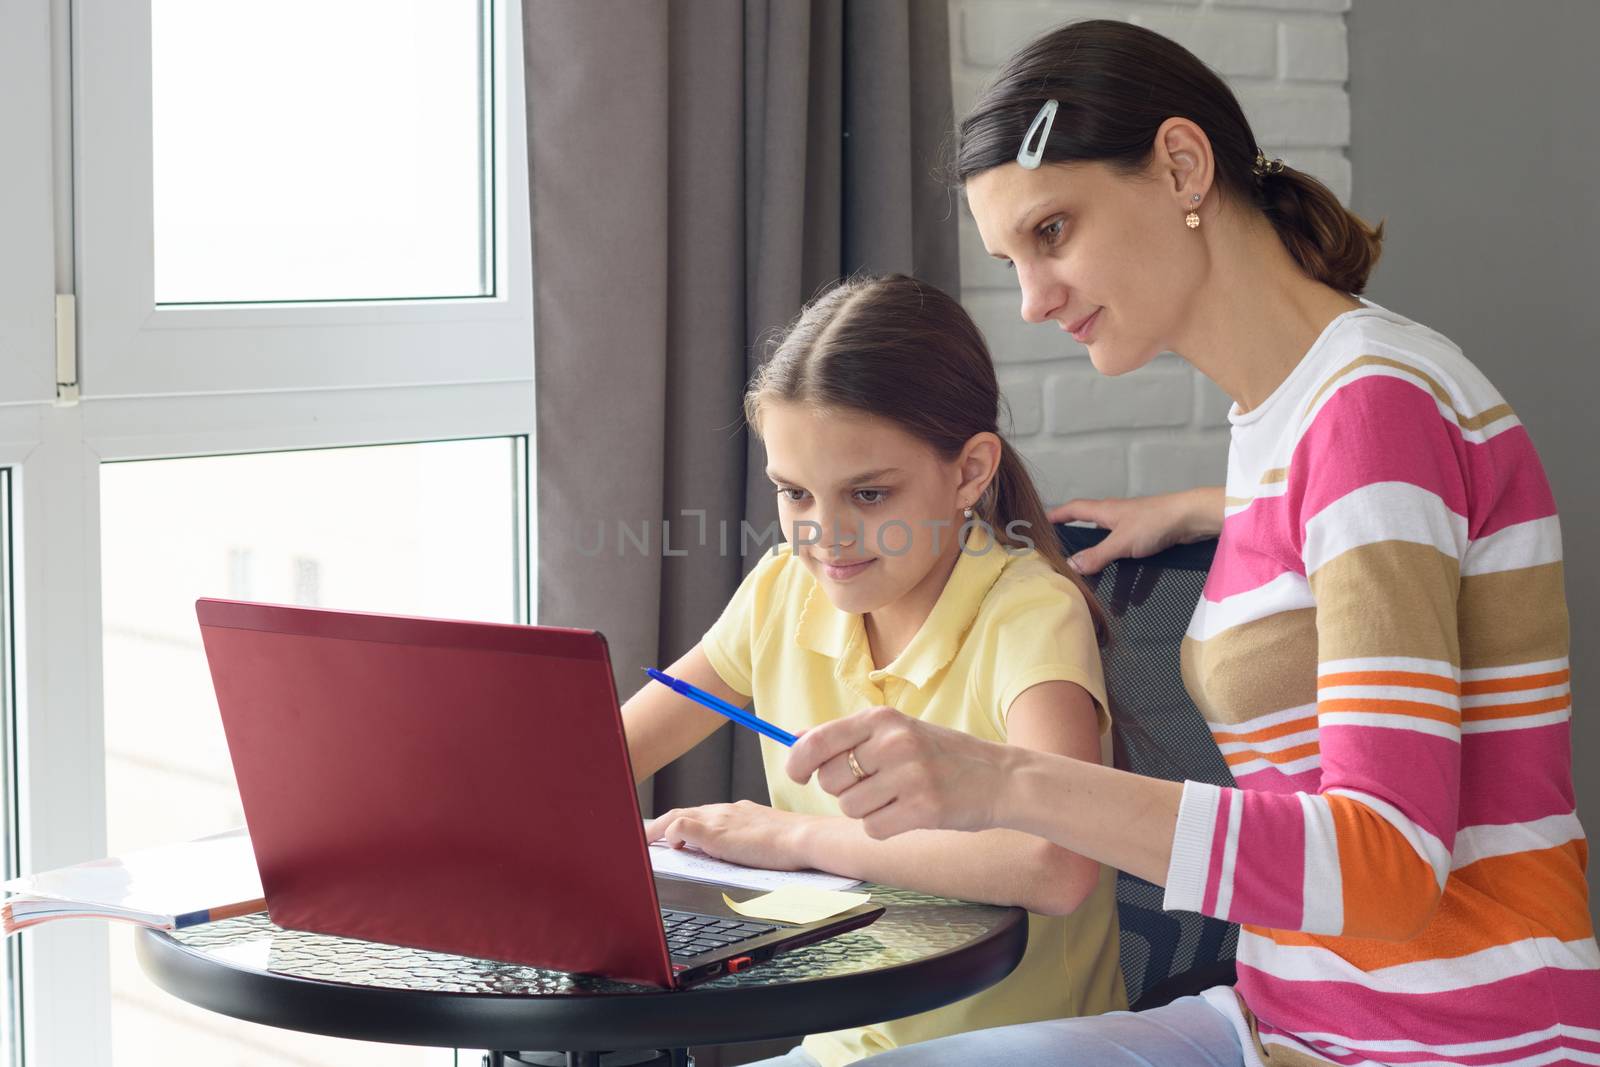 A tutor helps a girl learn online through the Internet